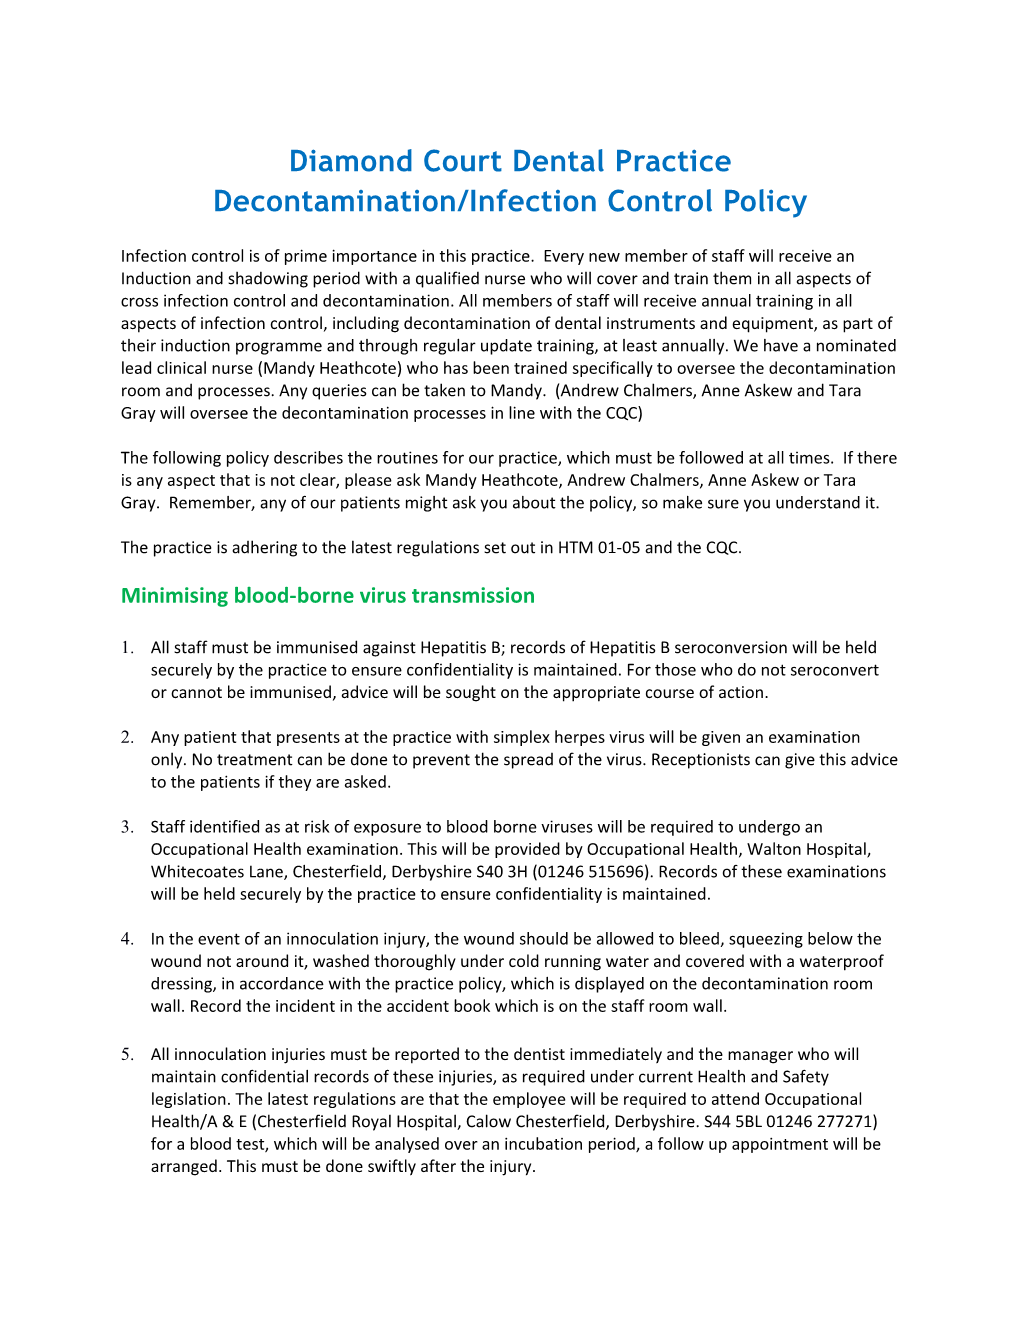 Diamond Court Dental Practice Decontamination/Infection Control Policy